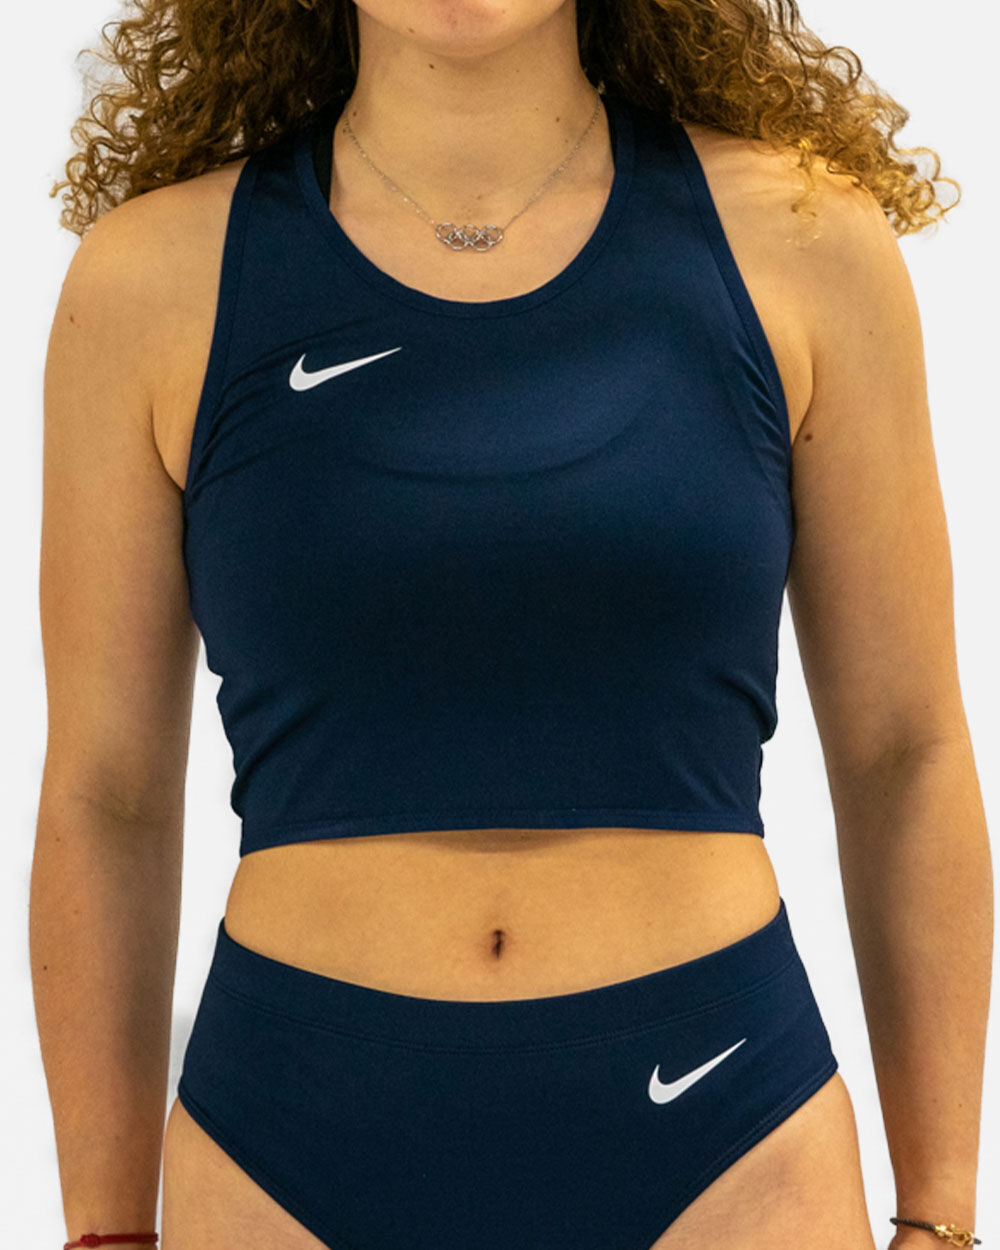 Camiseta sin mangas de running Nike Stock Azul Marino para Mujeres - NT0312-451